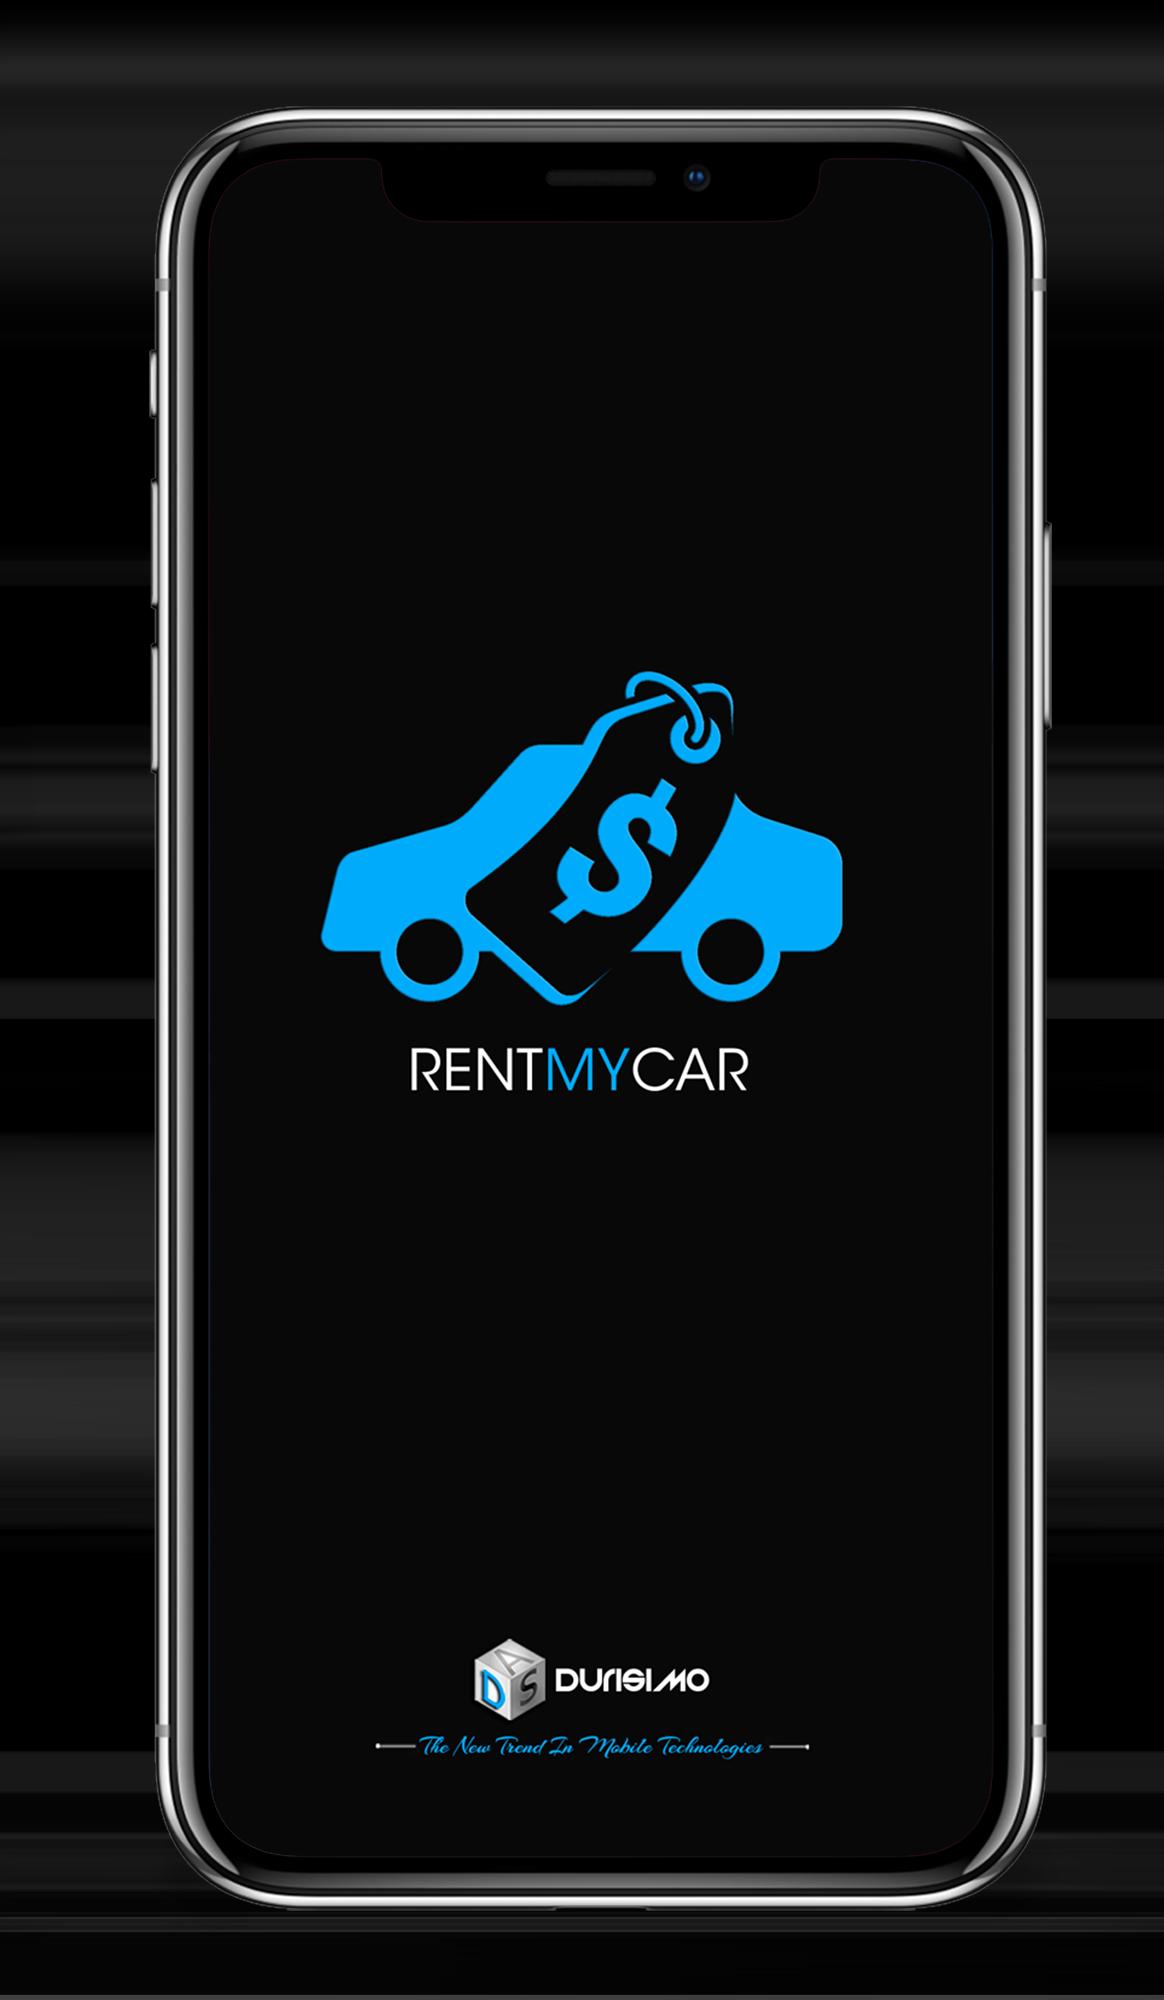 9. Rent Your Car